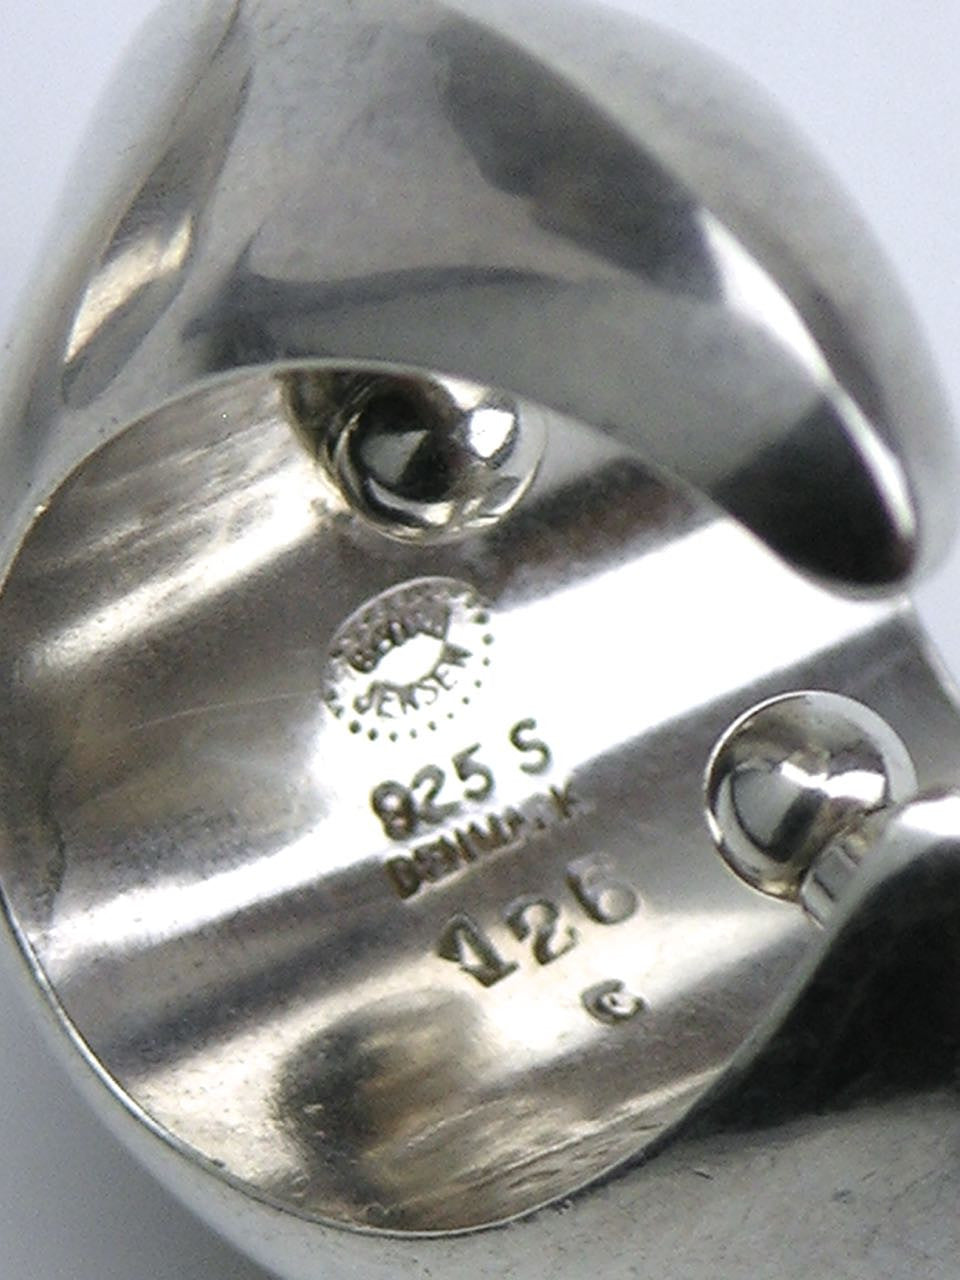 Georg Jensen silver domed hoop ear slings - design 126